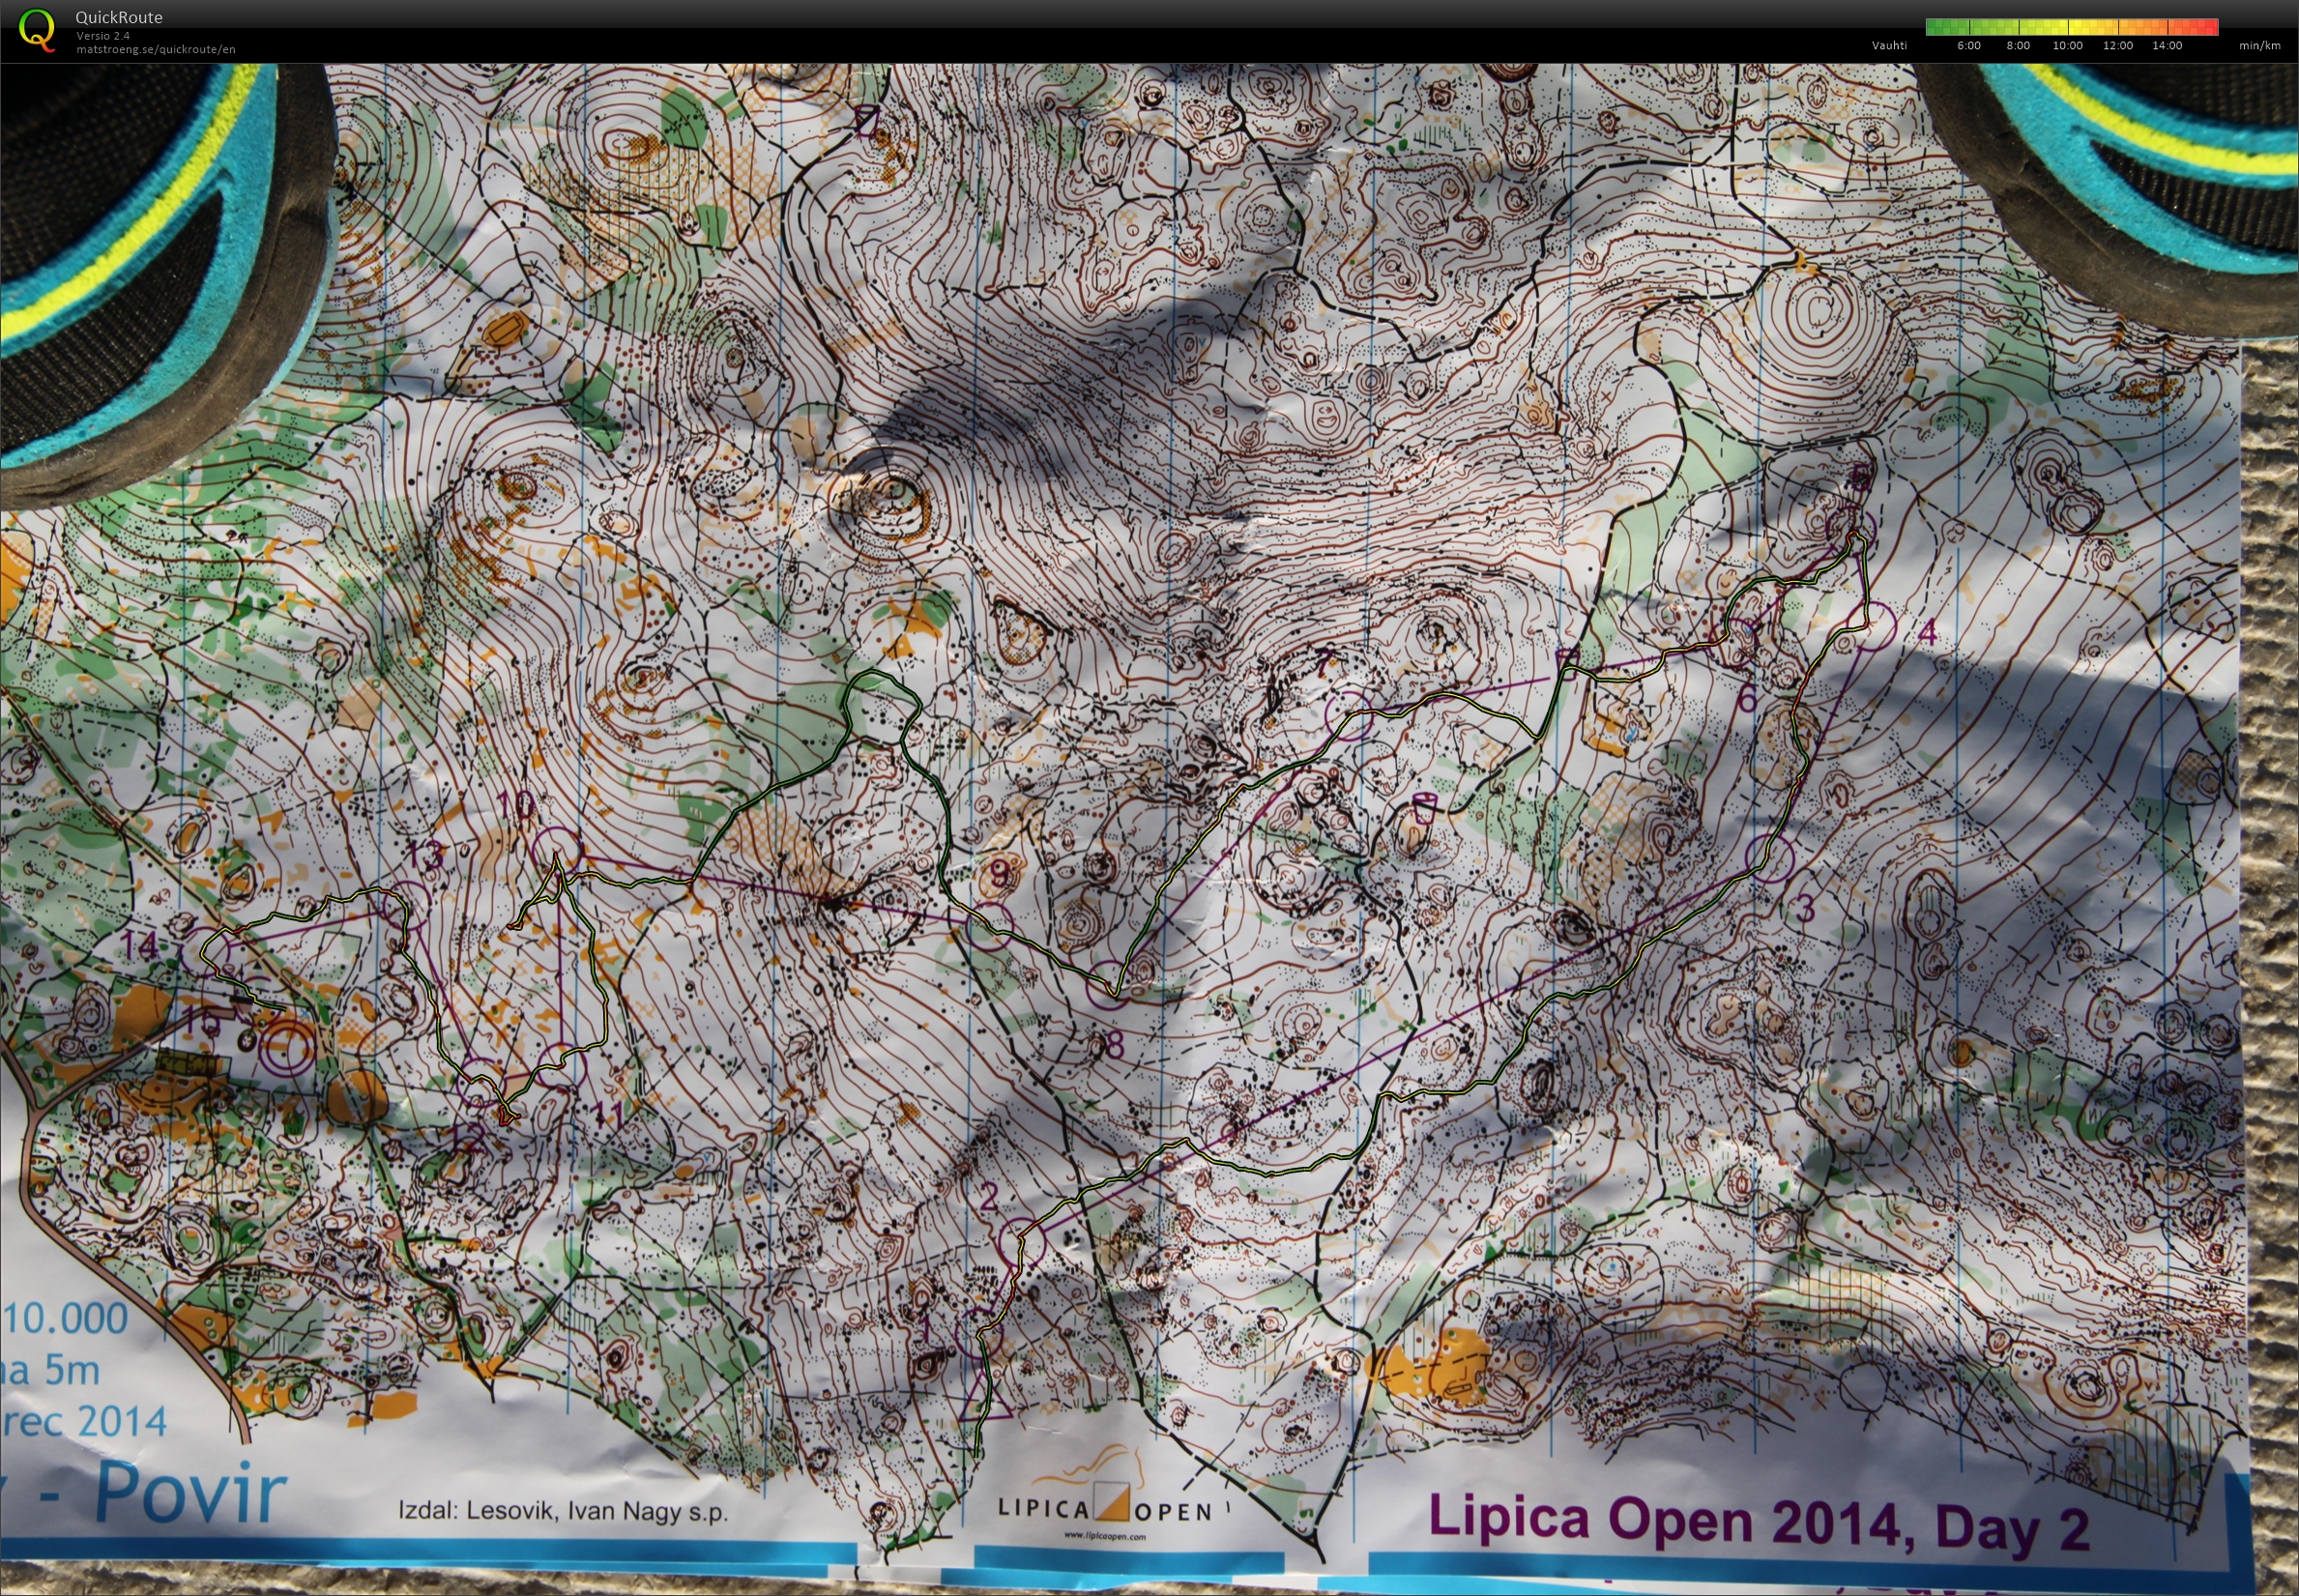 Lipica open 2 (09/03/2014)